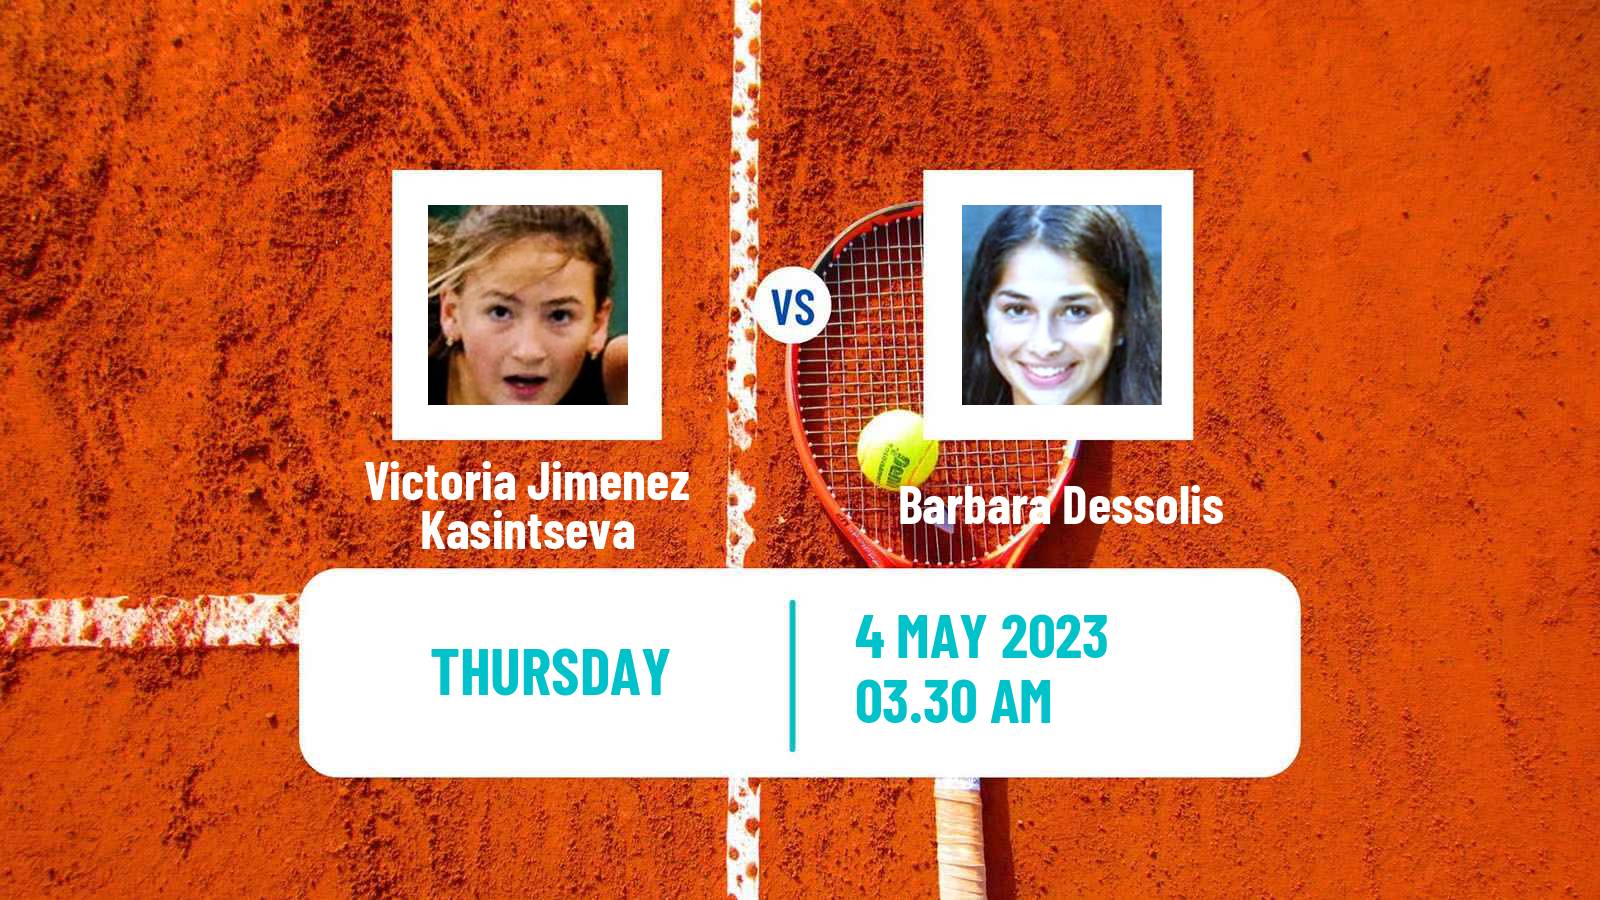 Tennis ITF Tournaments Victoria Jimenez Kasintseva - Barbara Dessolis